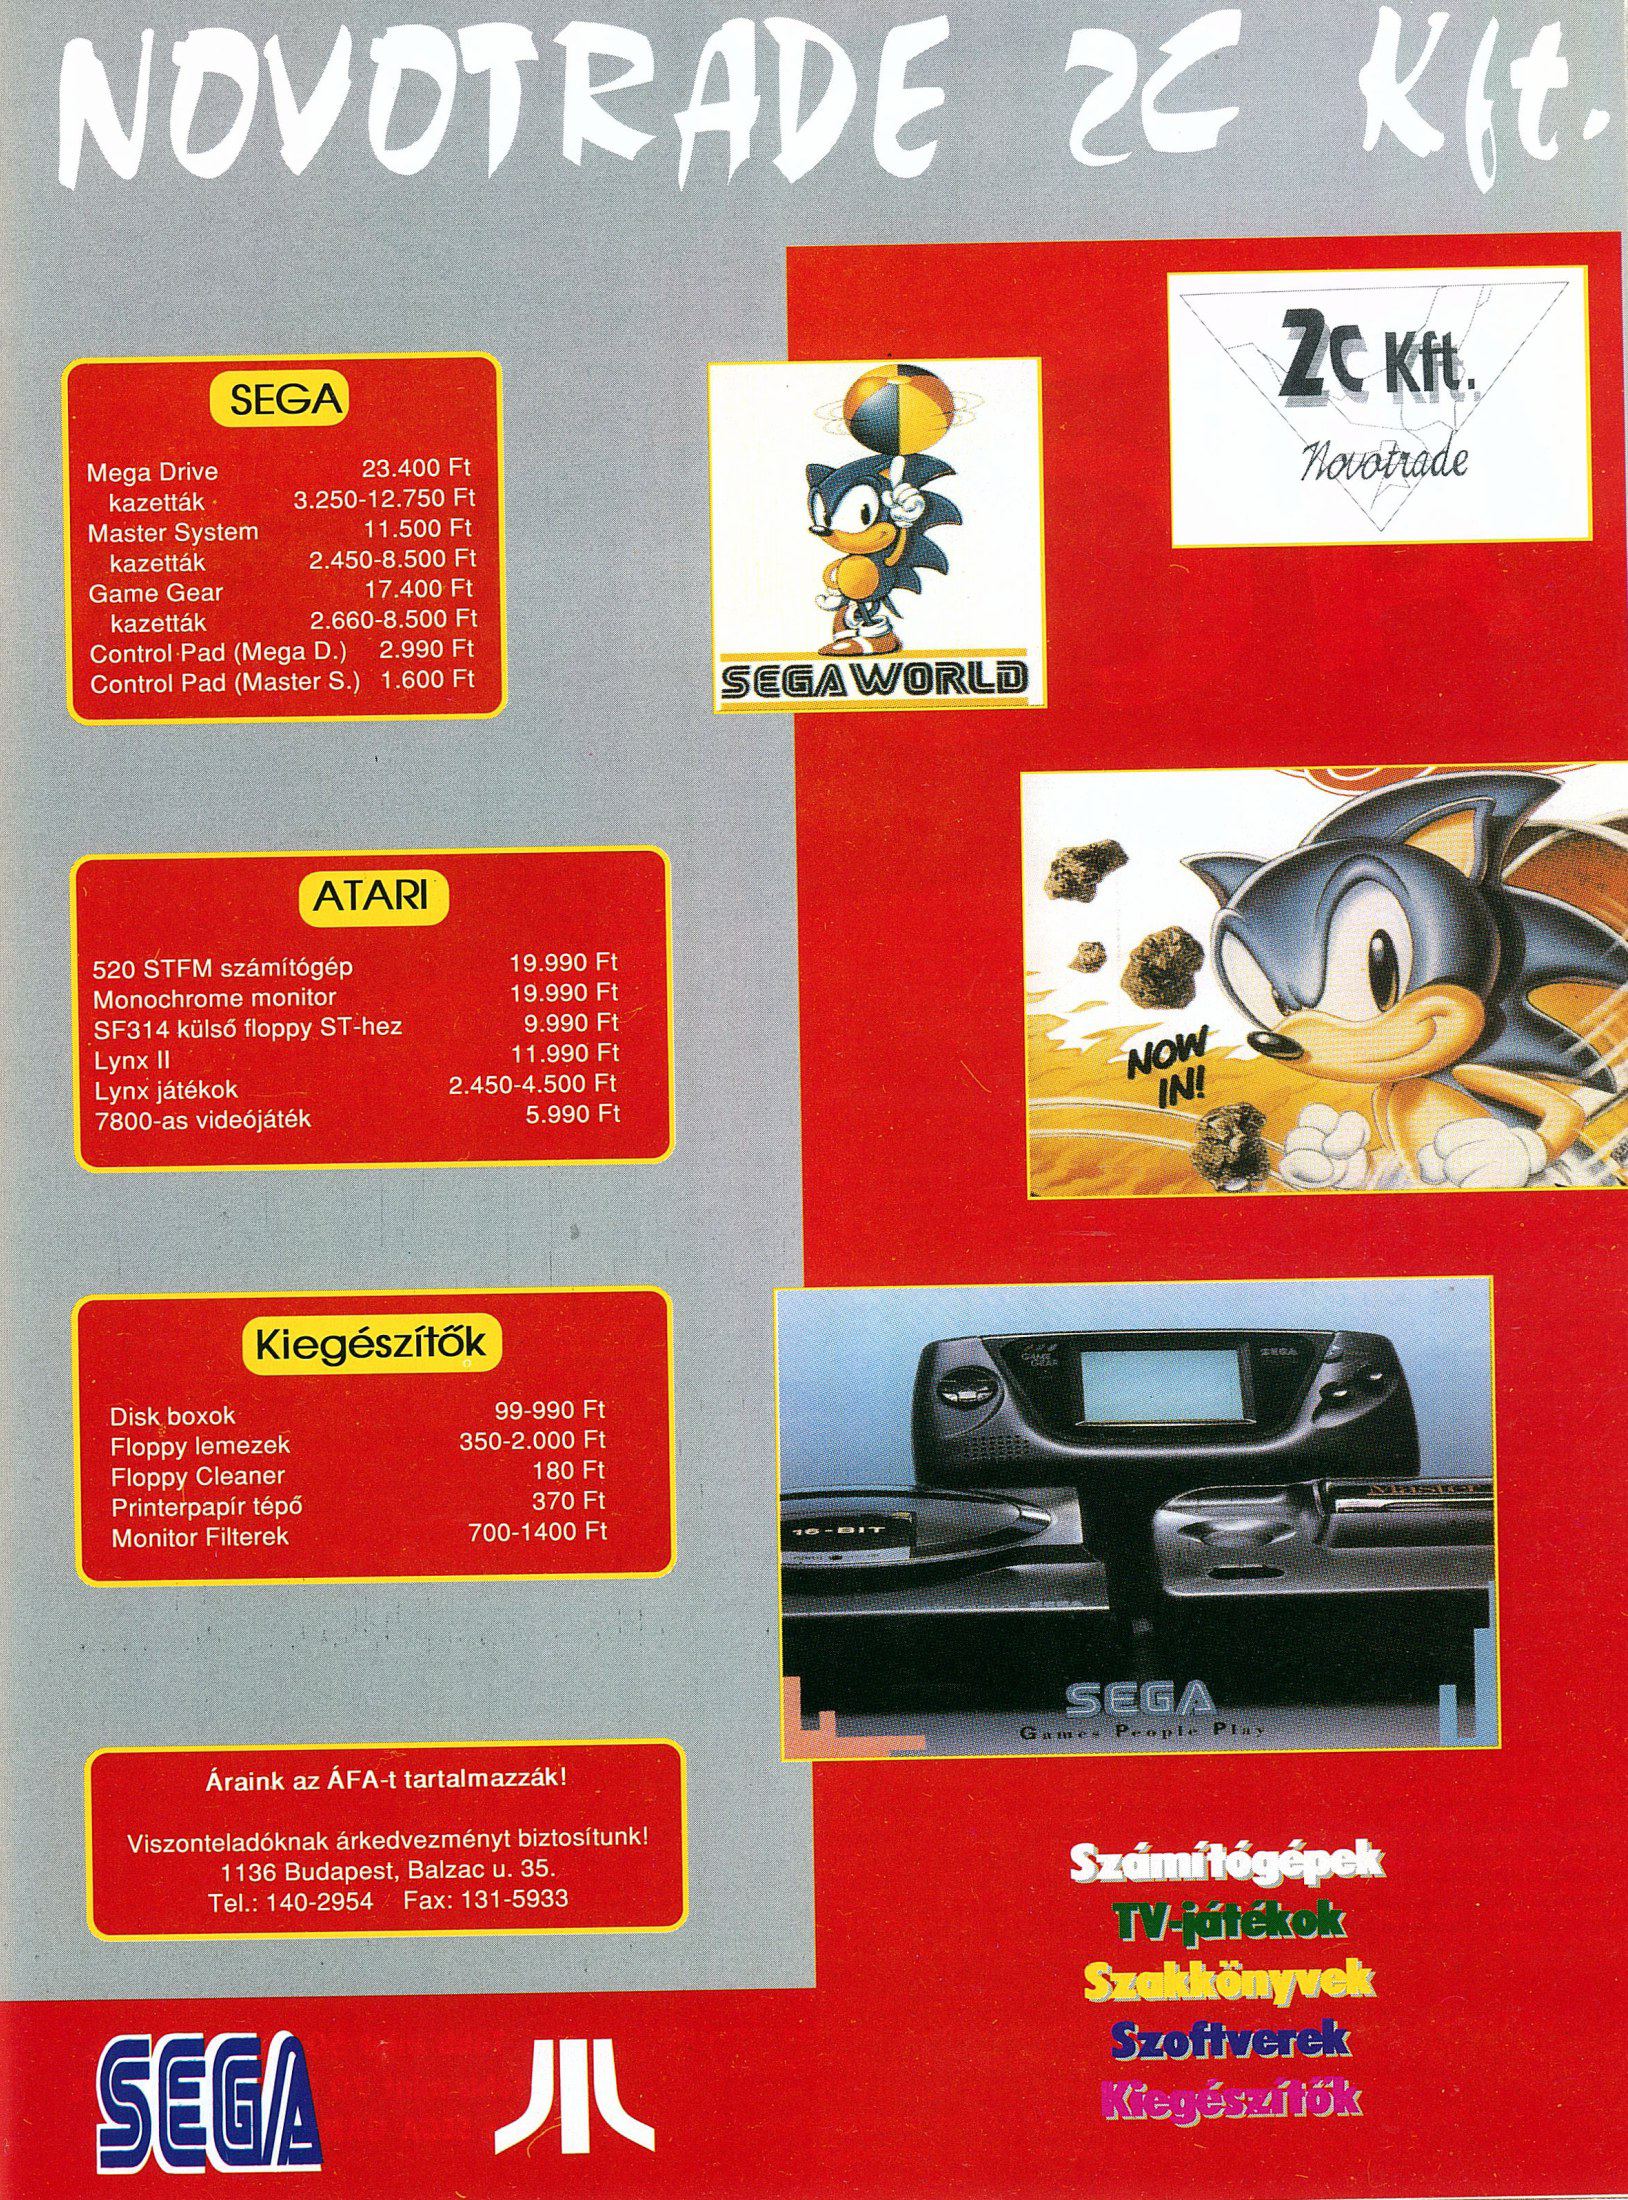 Guru 1994-04 HU Novotrade 2C advert.png